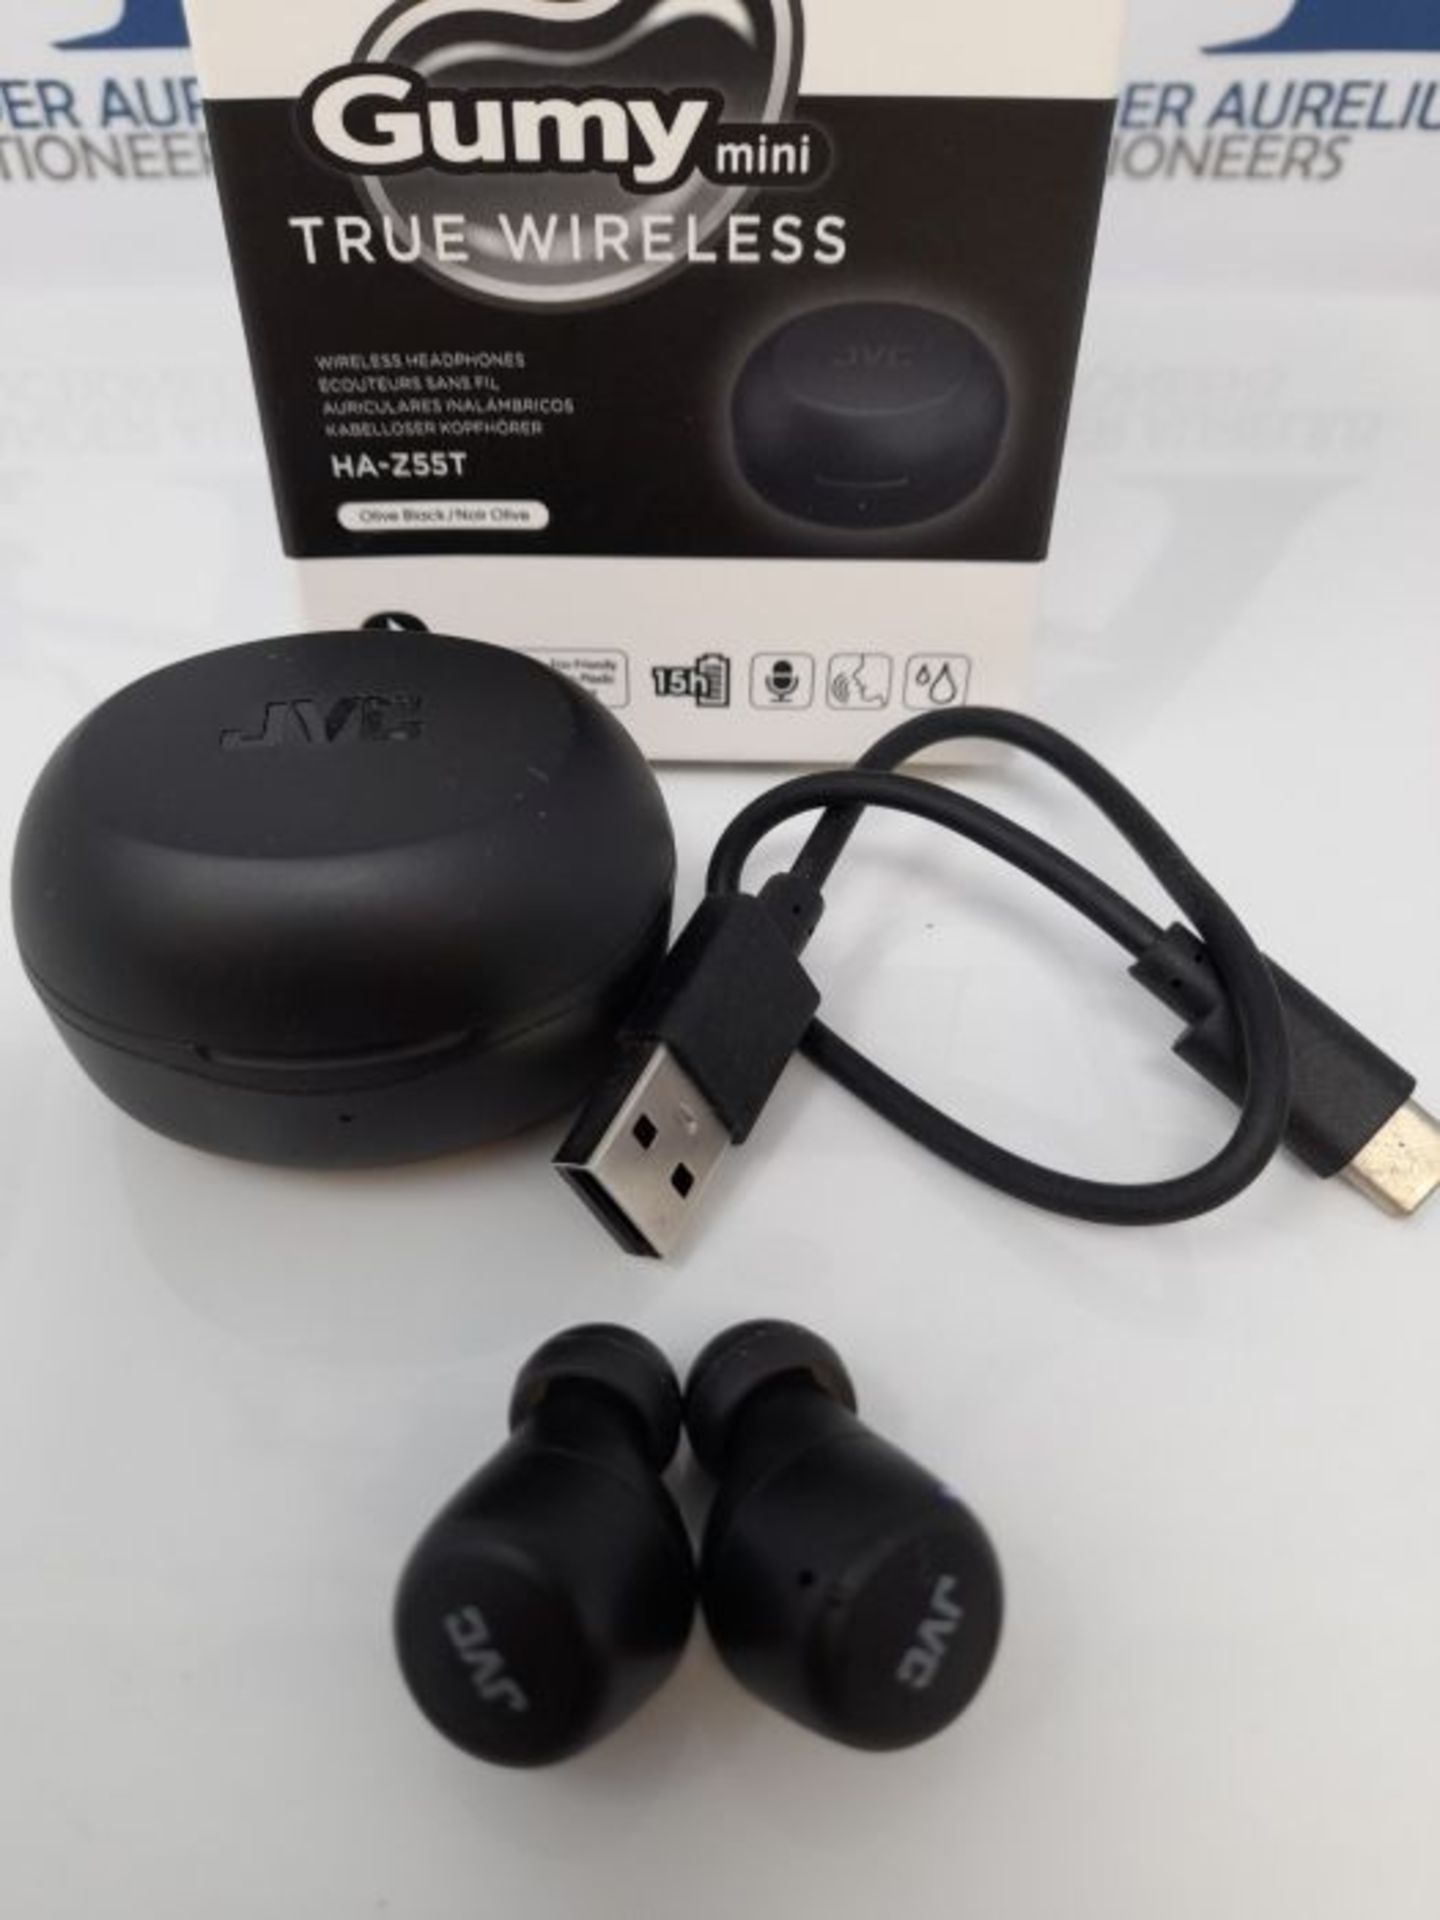 JVC Gumy Mini True Wireless Earbuds [Amazon Exclusive Edition], Bluetooth 5.1, Splash - Image 3 of 3